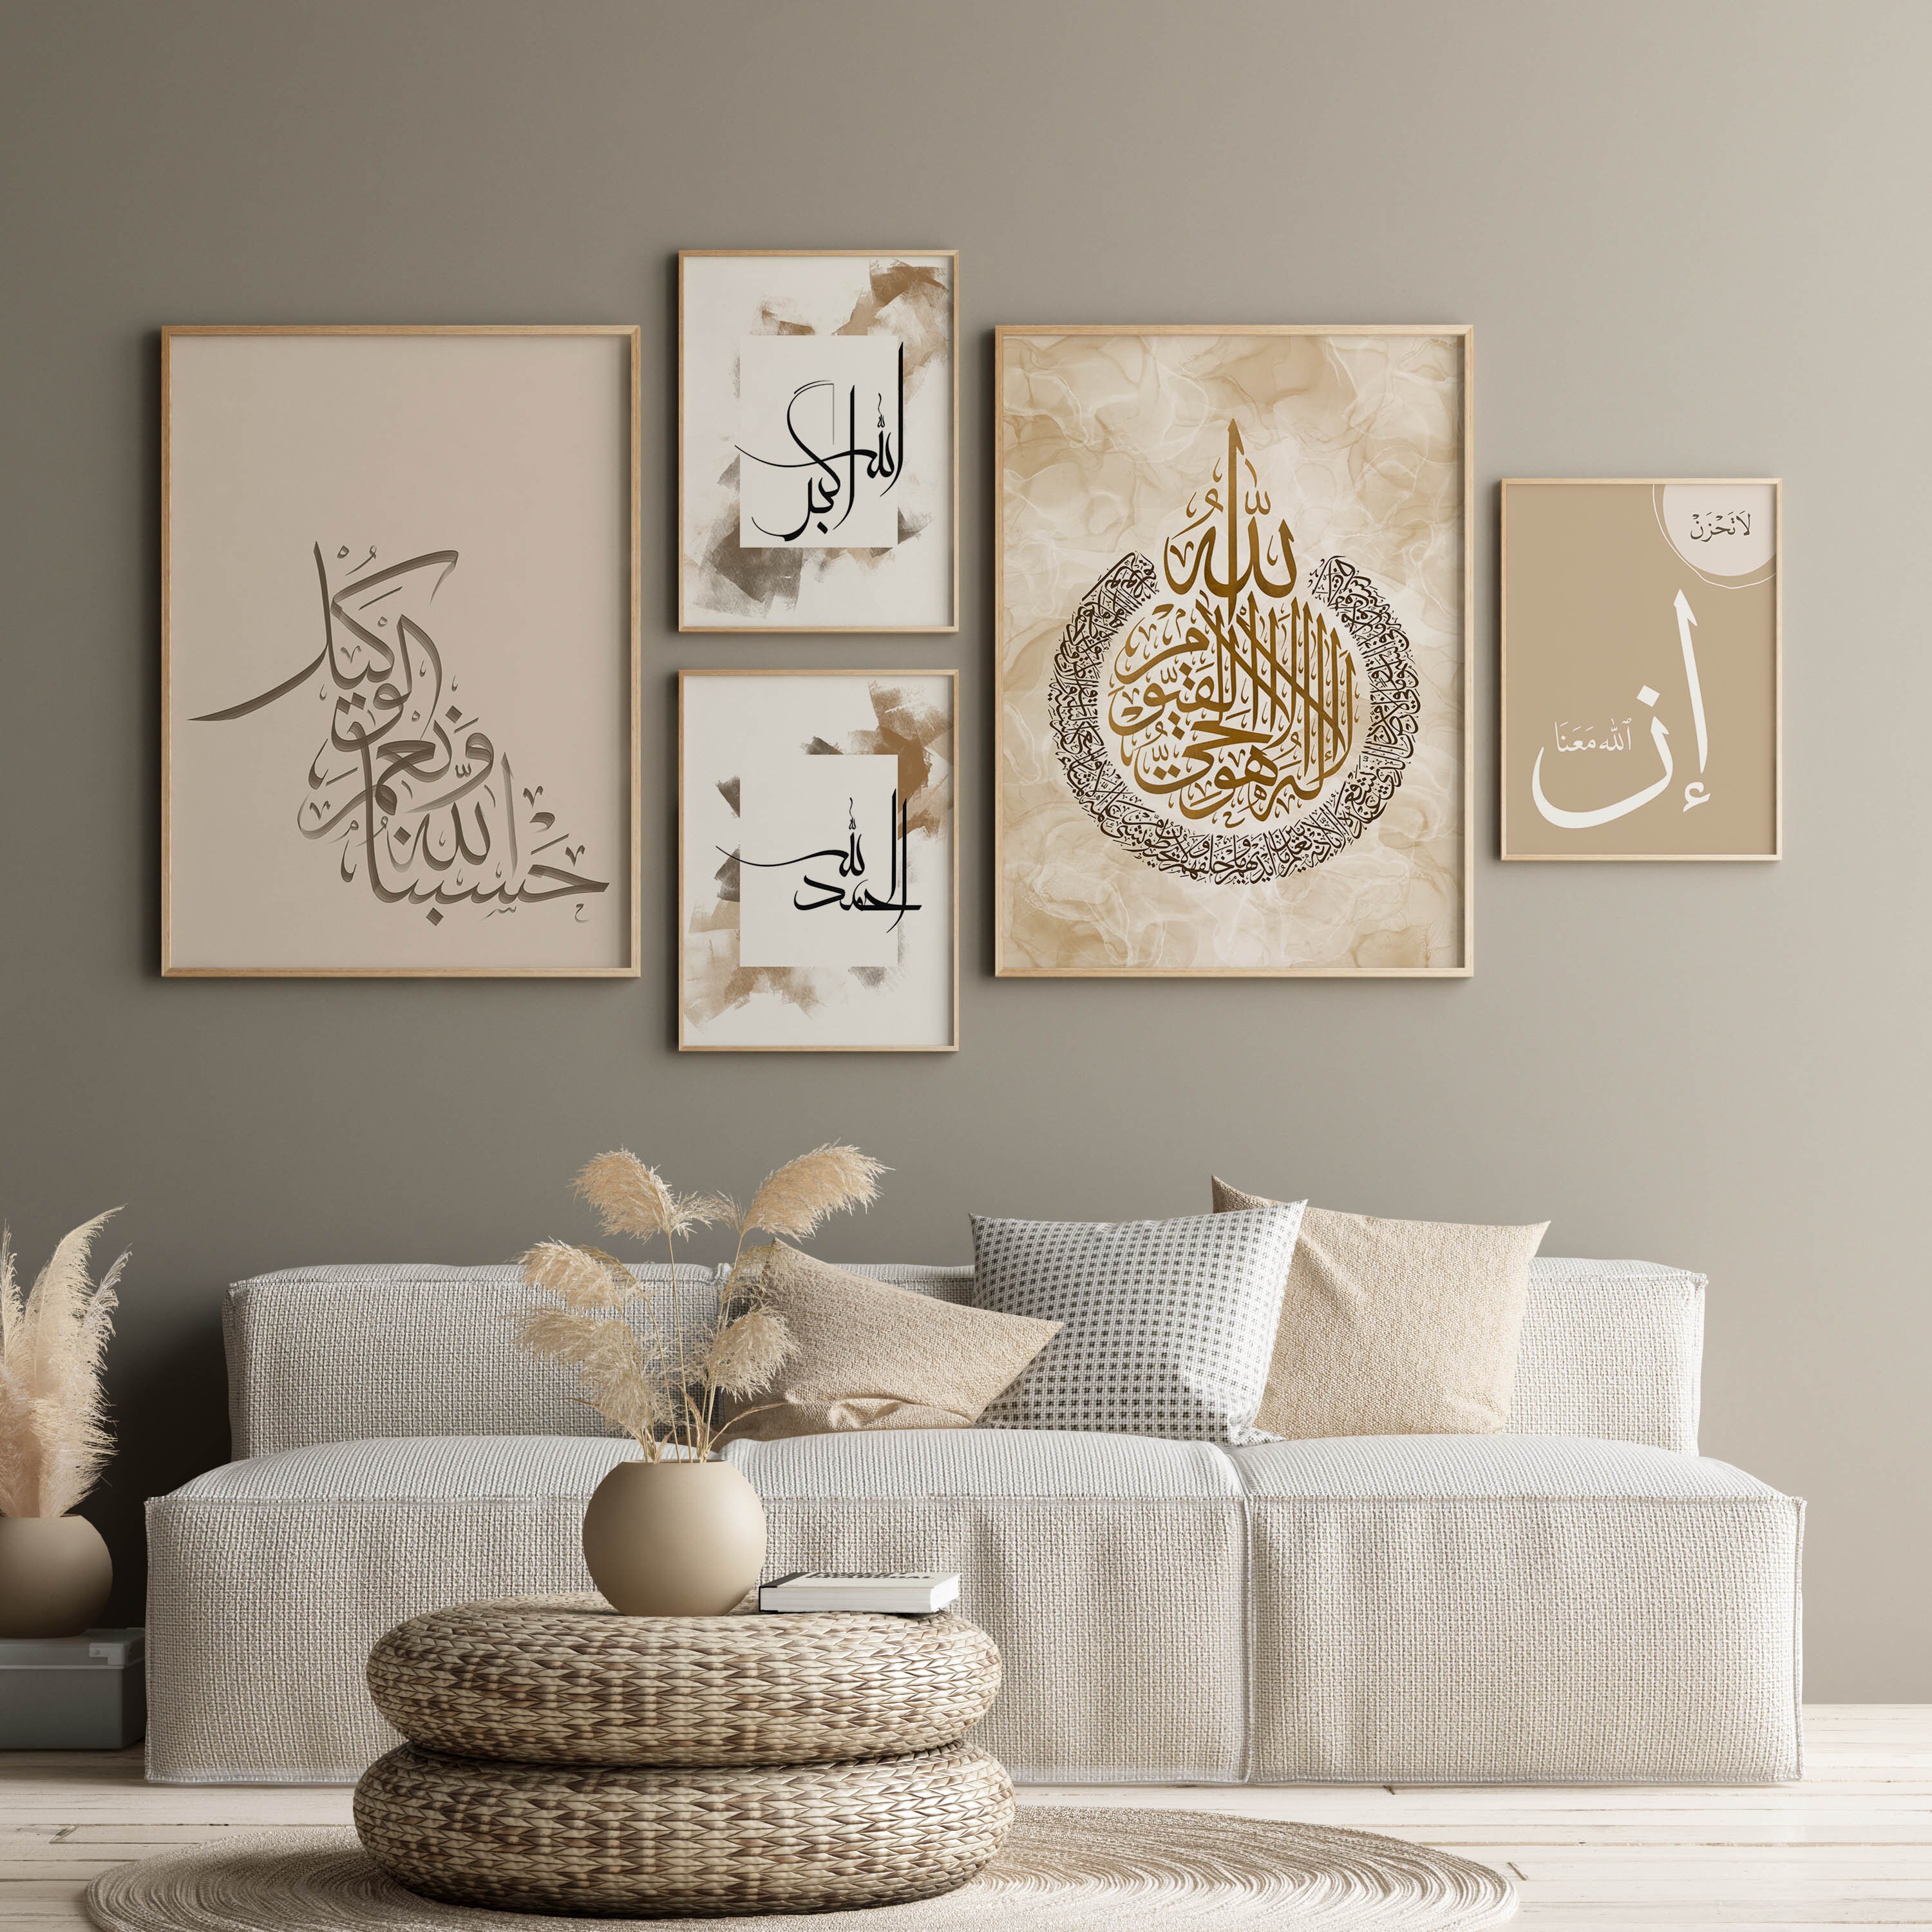 Gök-Türk Deko Zülfikar Abdulhamids Tugra Decorative Figure Allah Islam  Muslim Maket for Living Room Office Home Decoration Art Prints (Allah Gold)